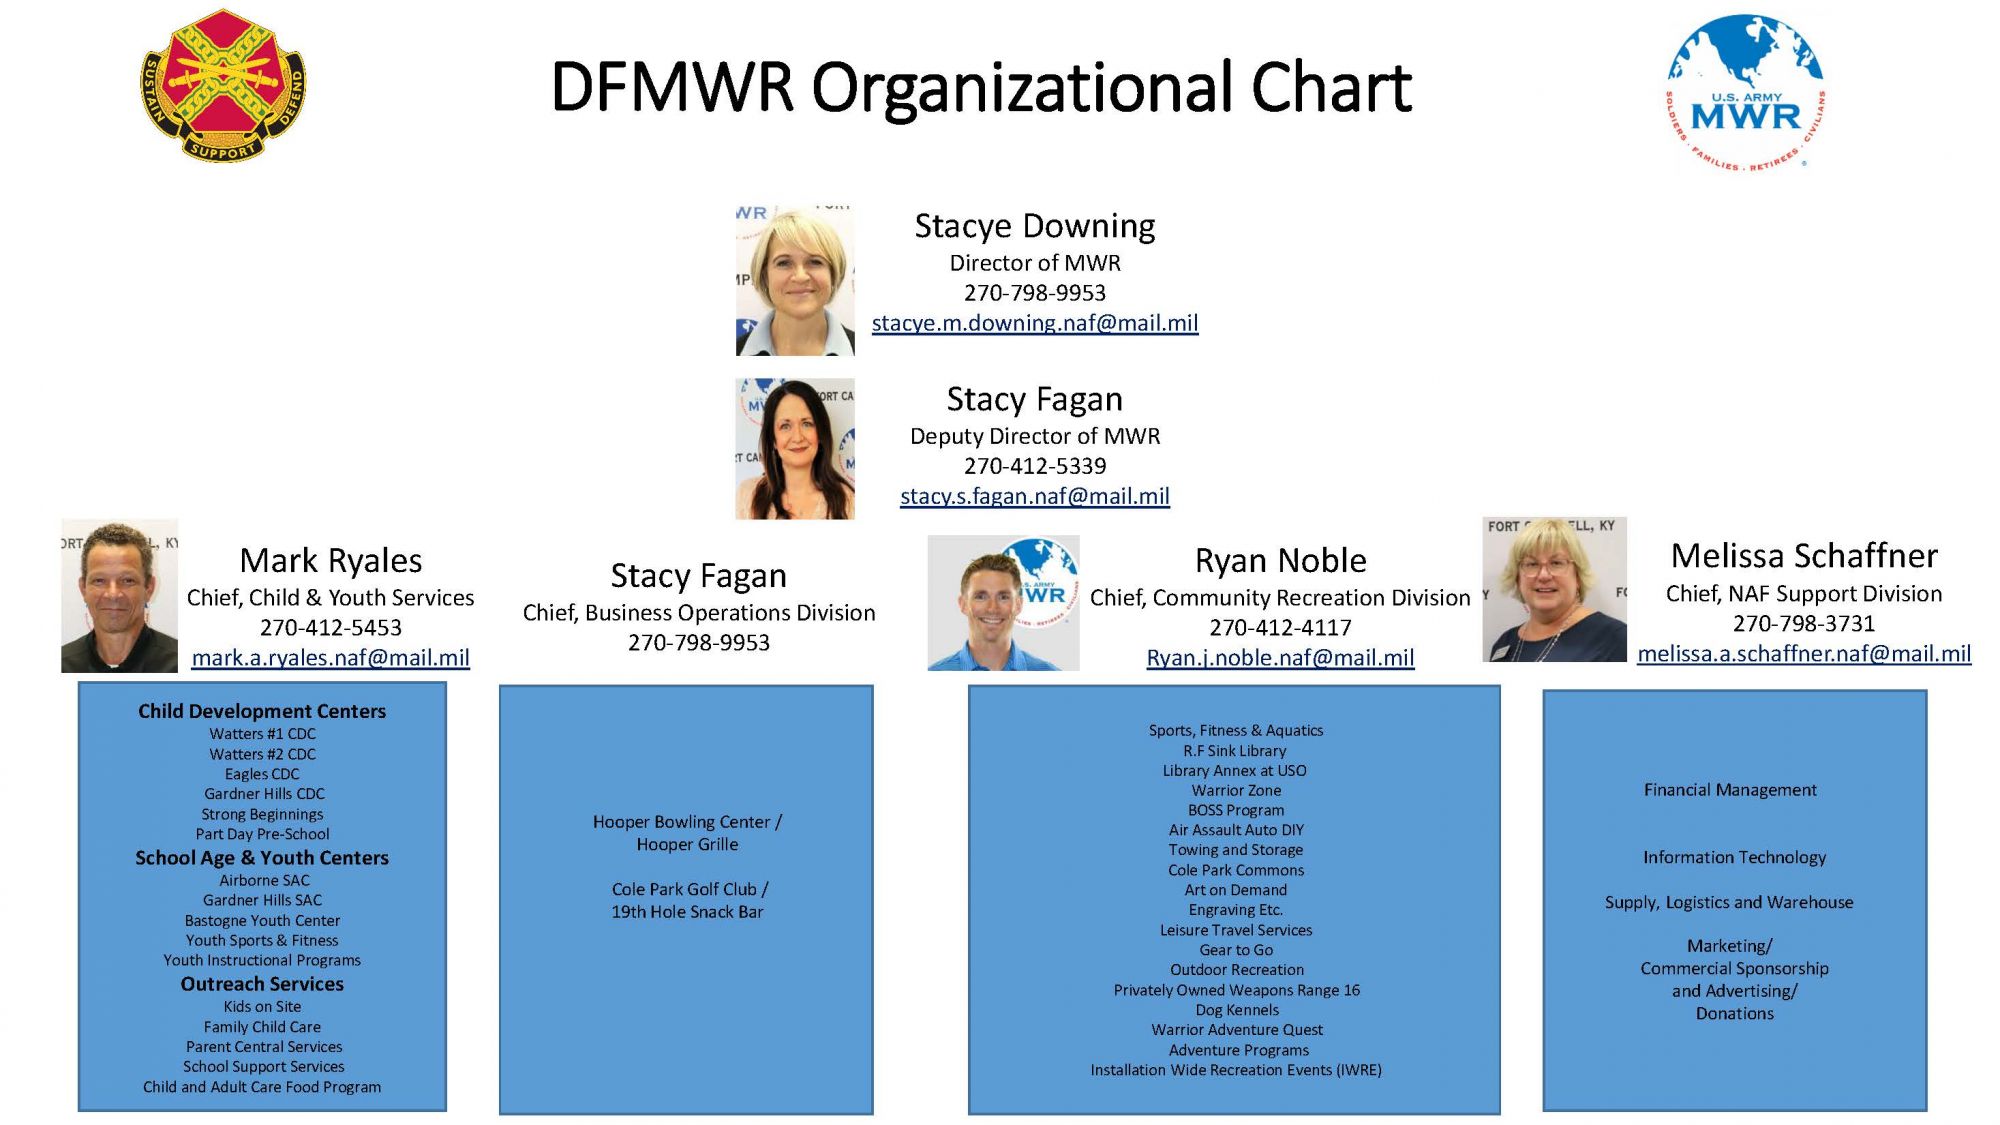 FC-DFMWR-Org-Chart-Aug21.jpg